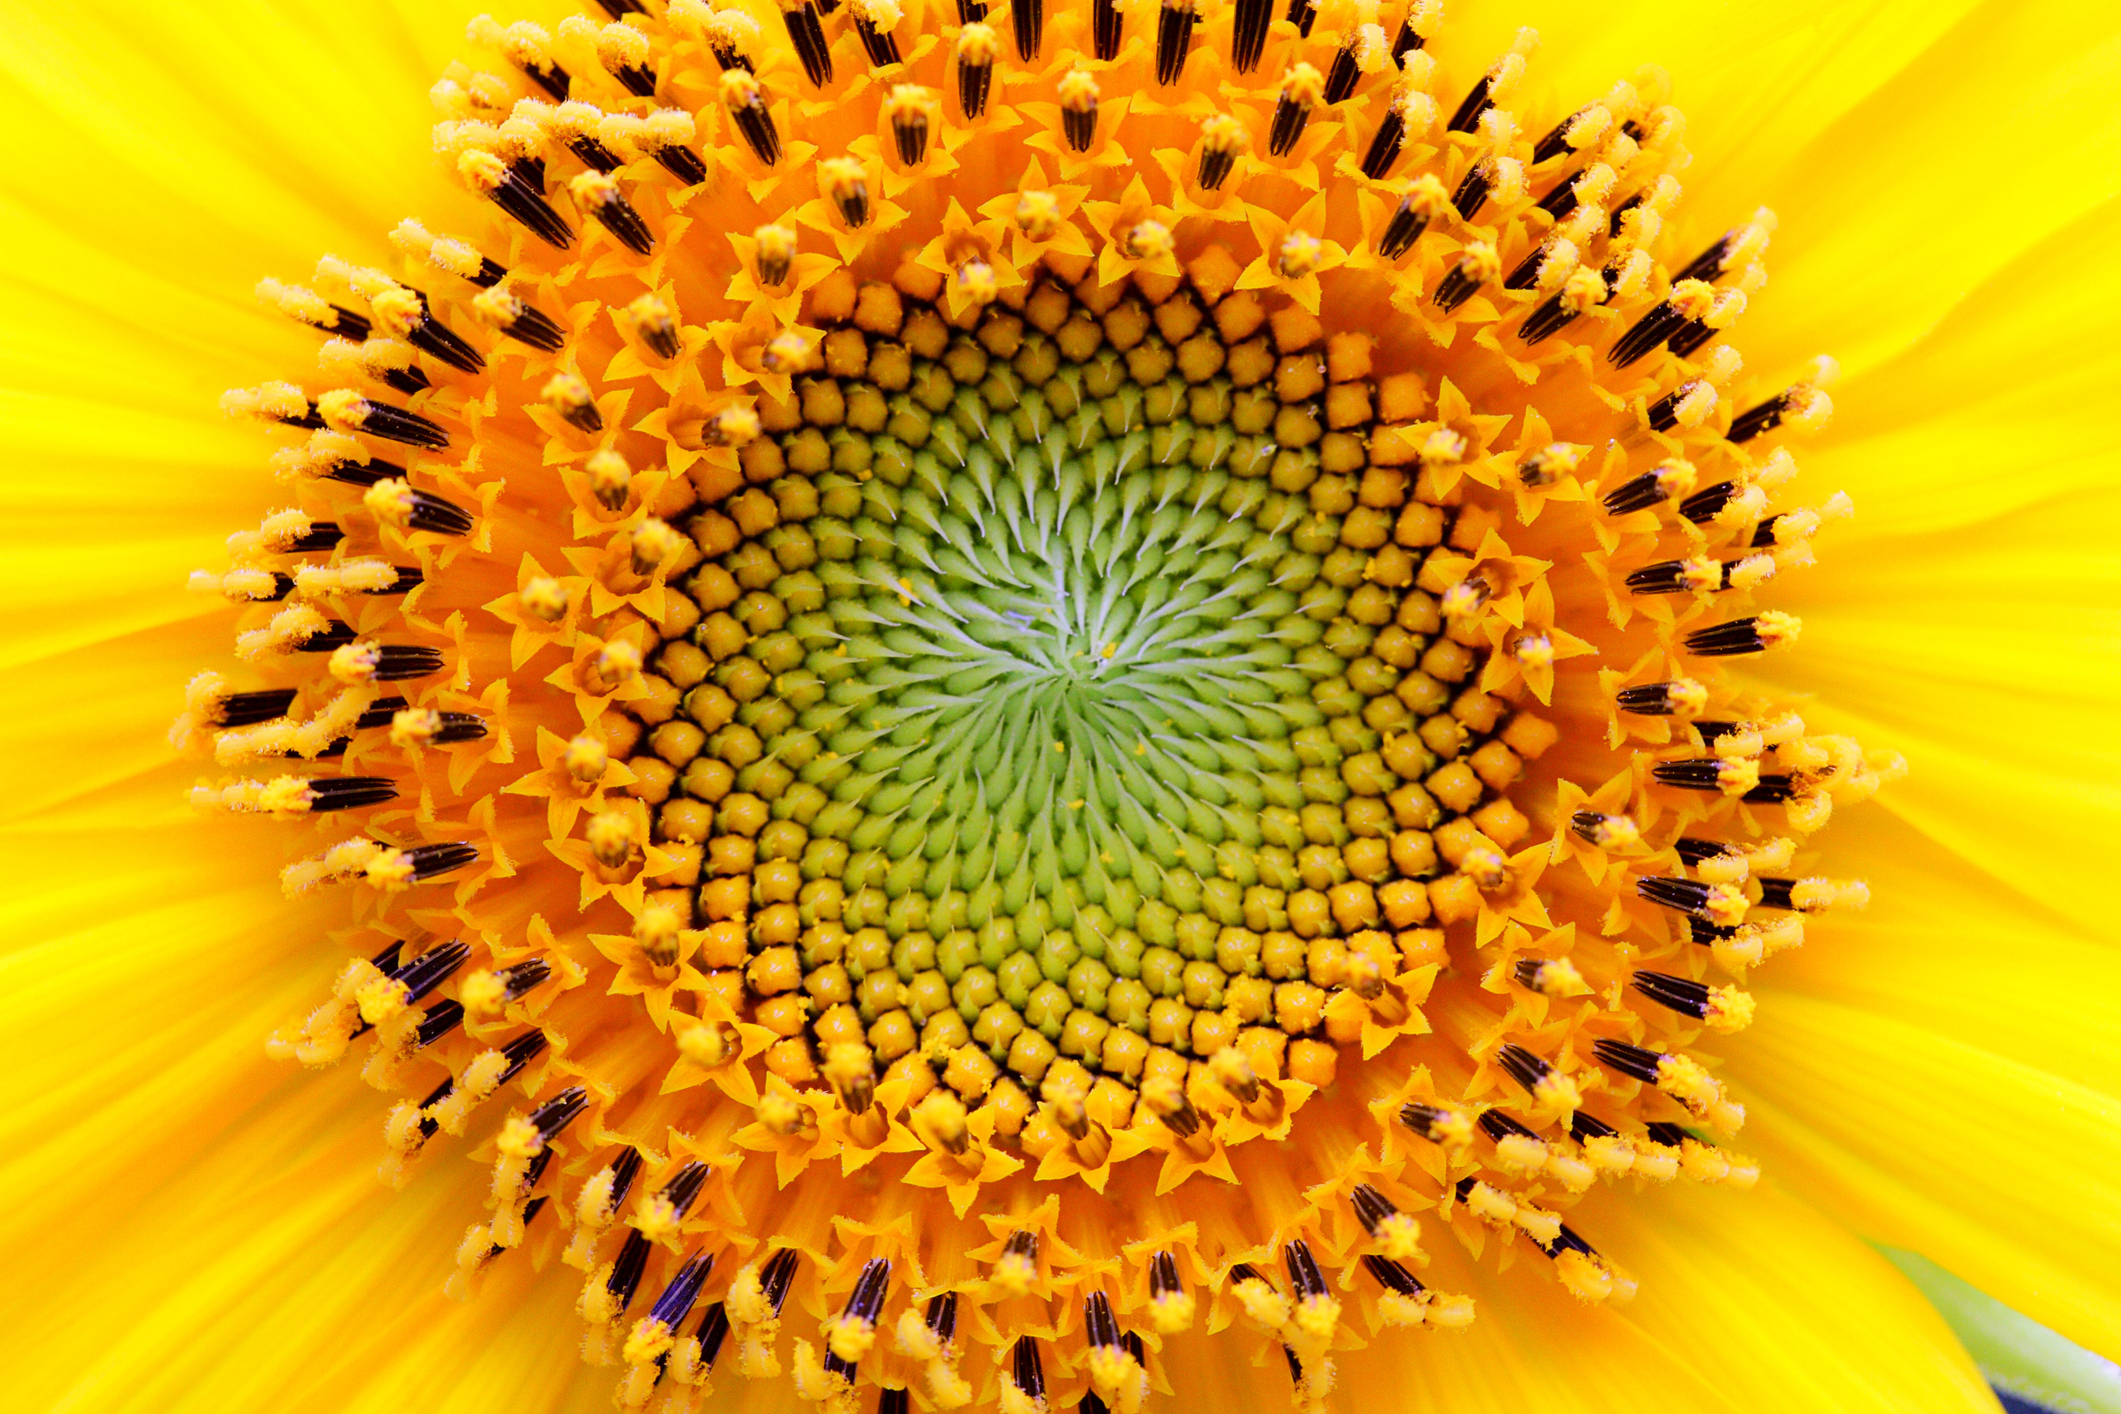 Fibonacci's sequence in a sunflower.